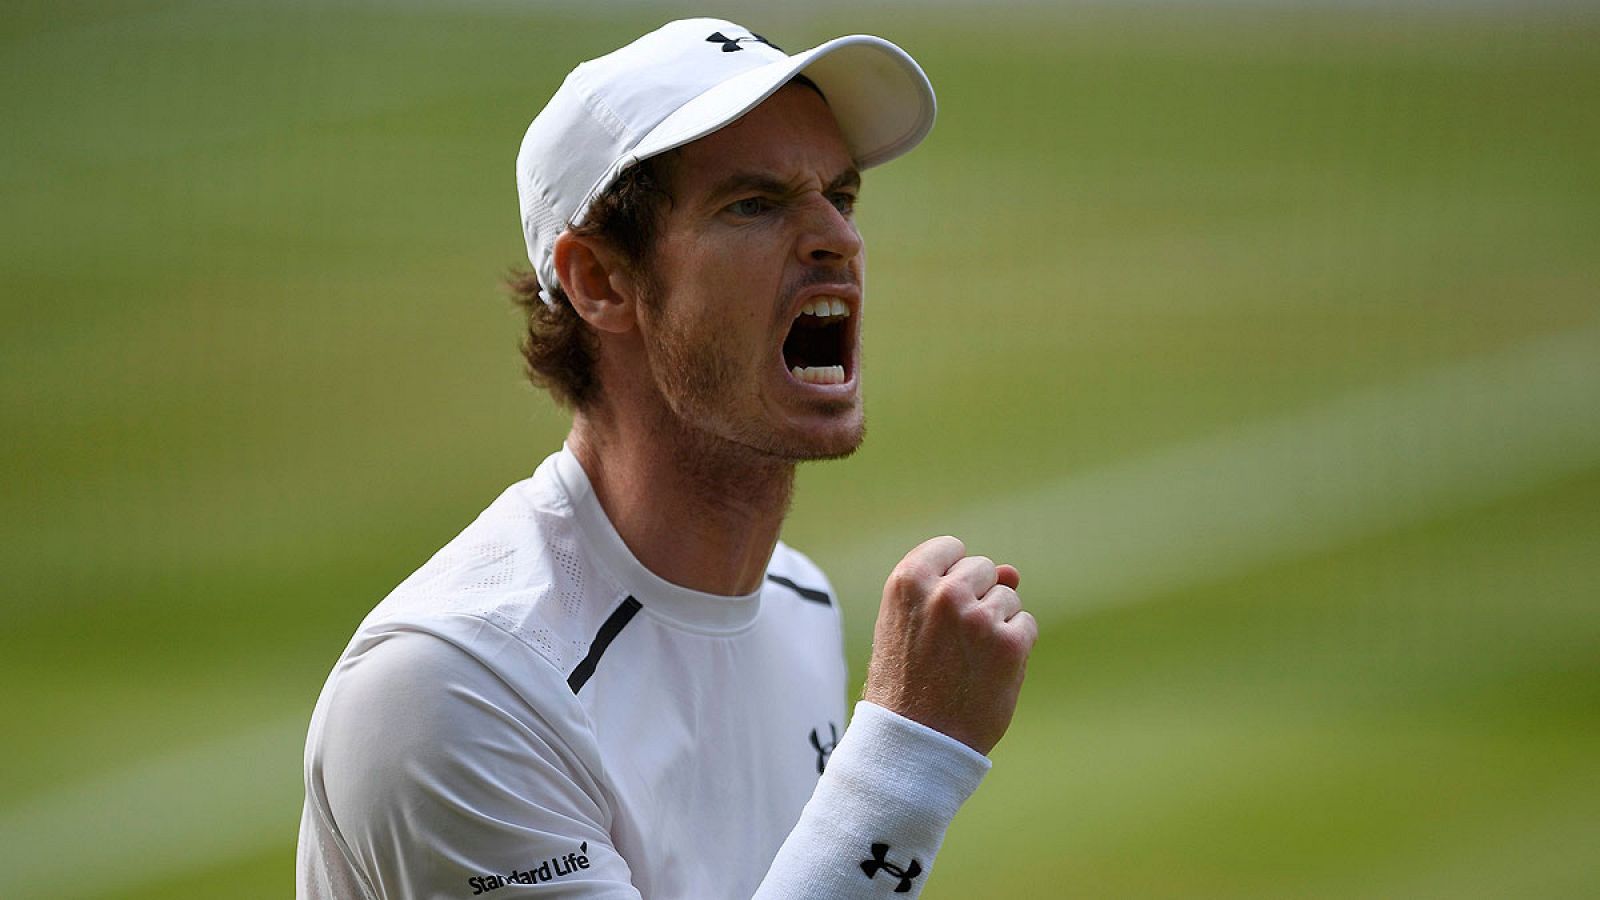 El escocés Andy Murray gana su segundo Wimbledon